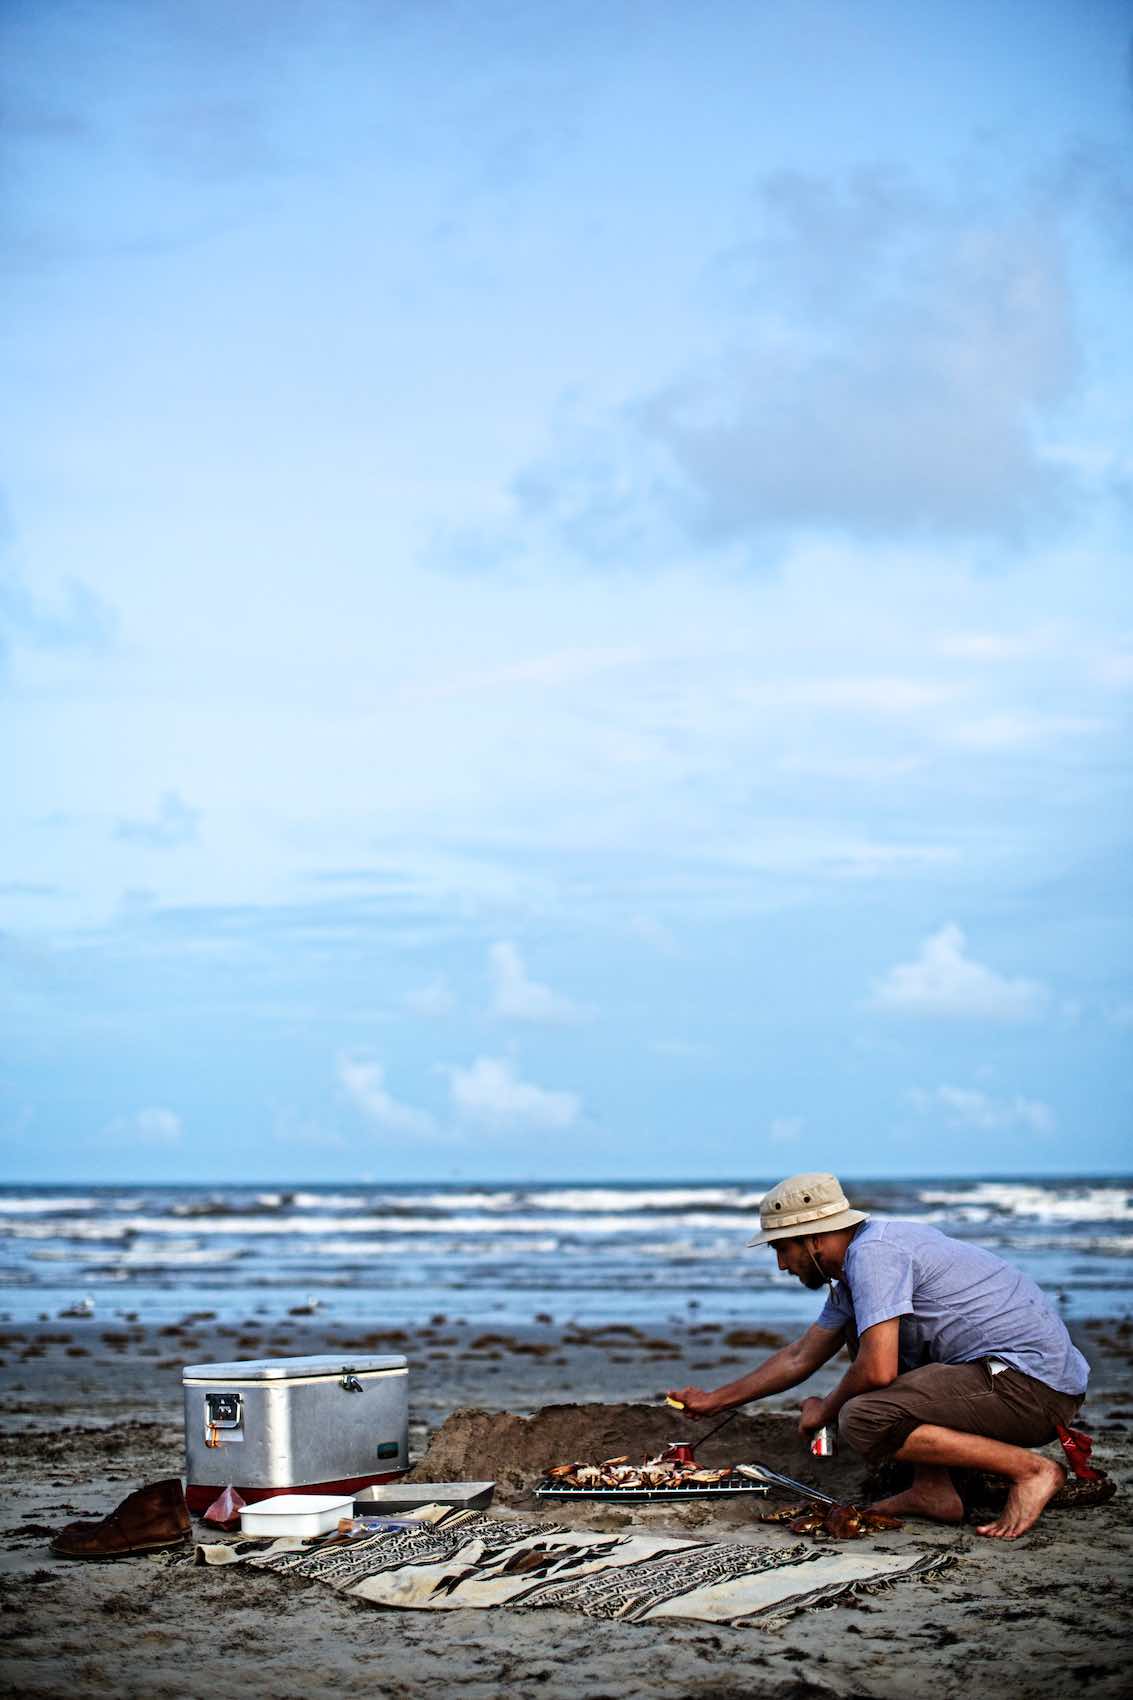 Jody Horton Photography - Cook preparing crab on a sandy beach.